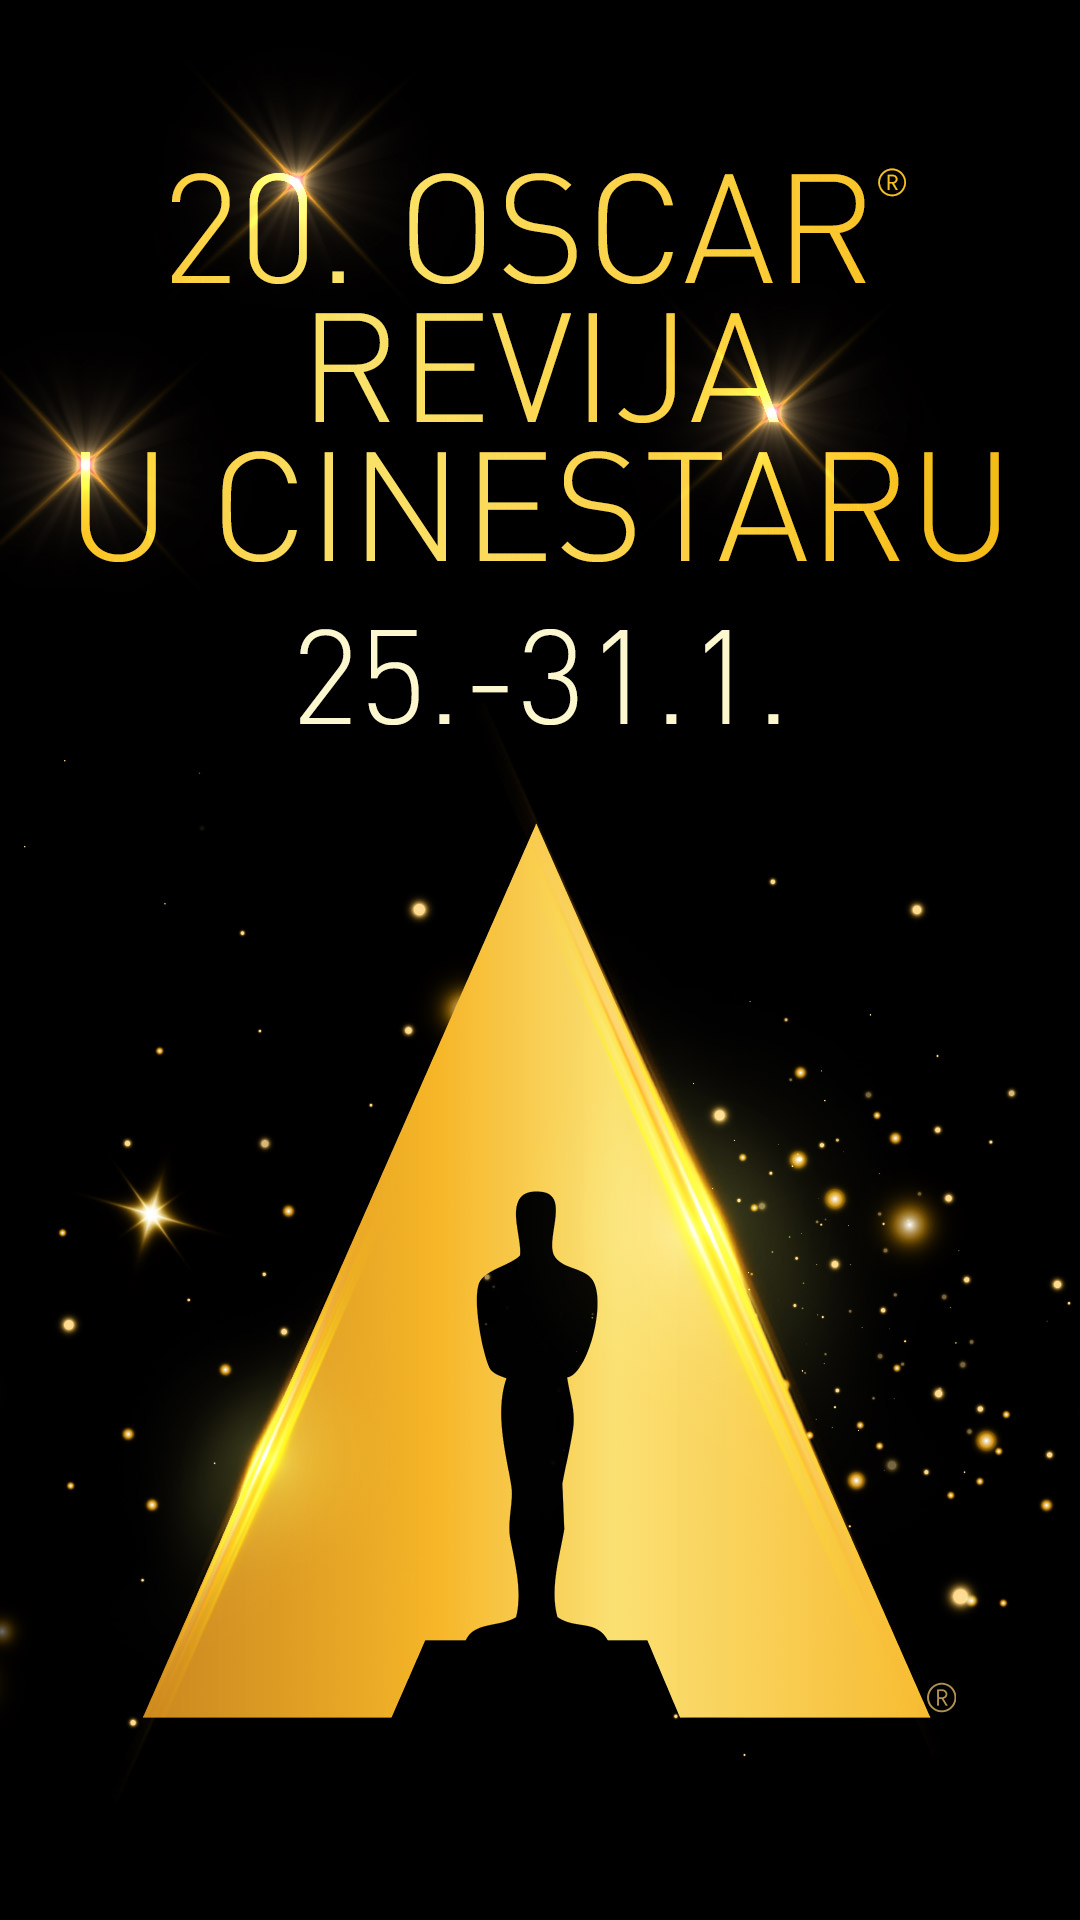 Oscar® revija CineStar